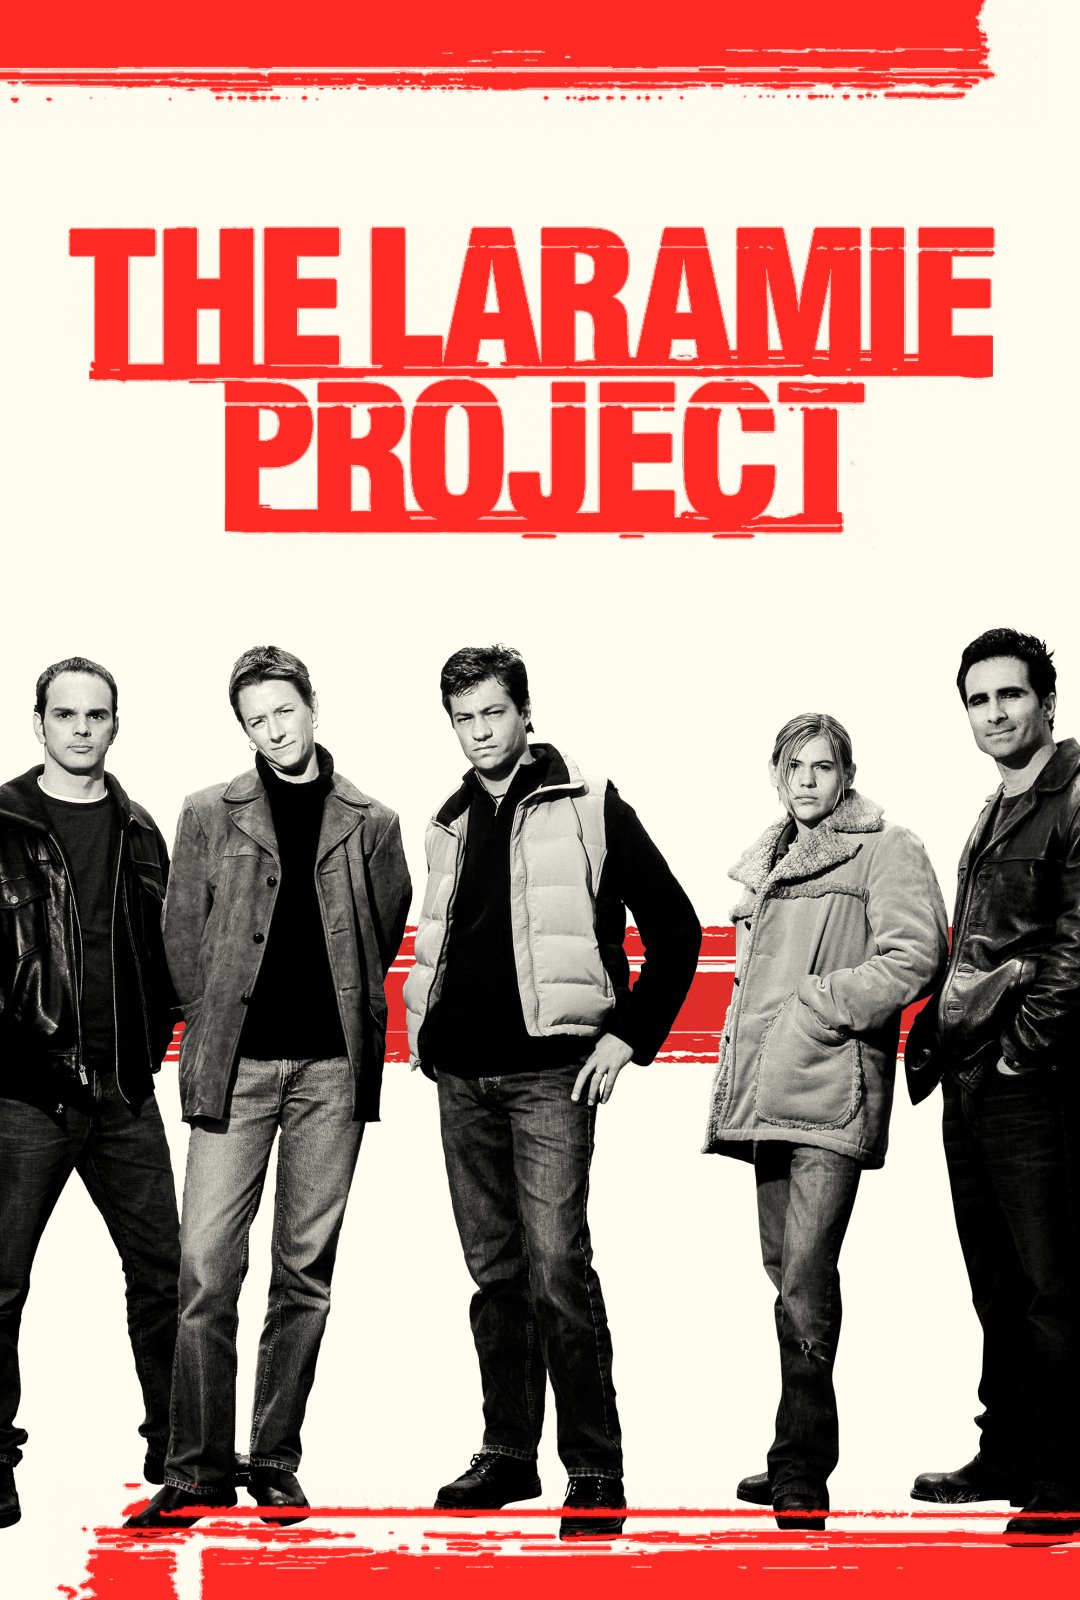 The Laramie Project